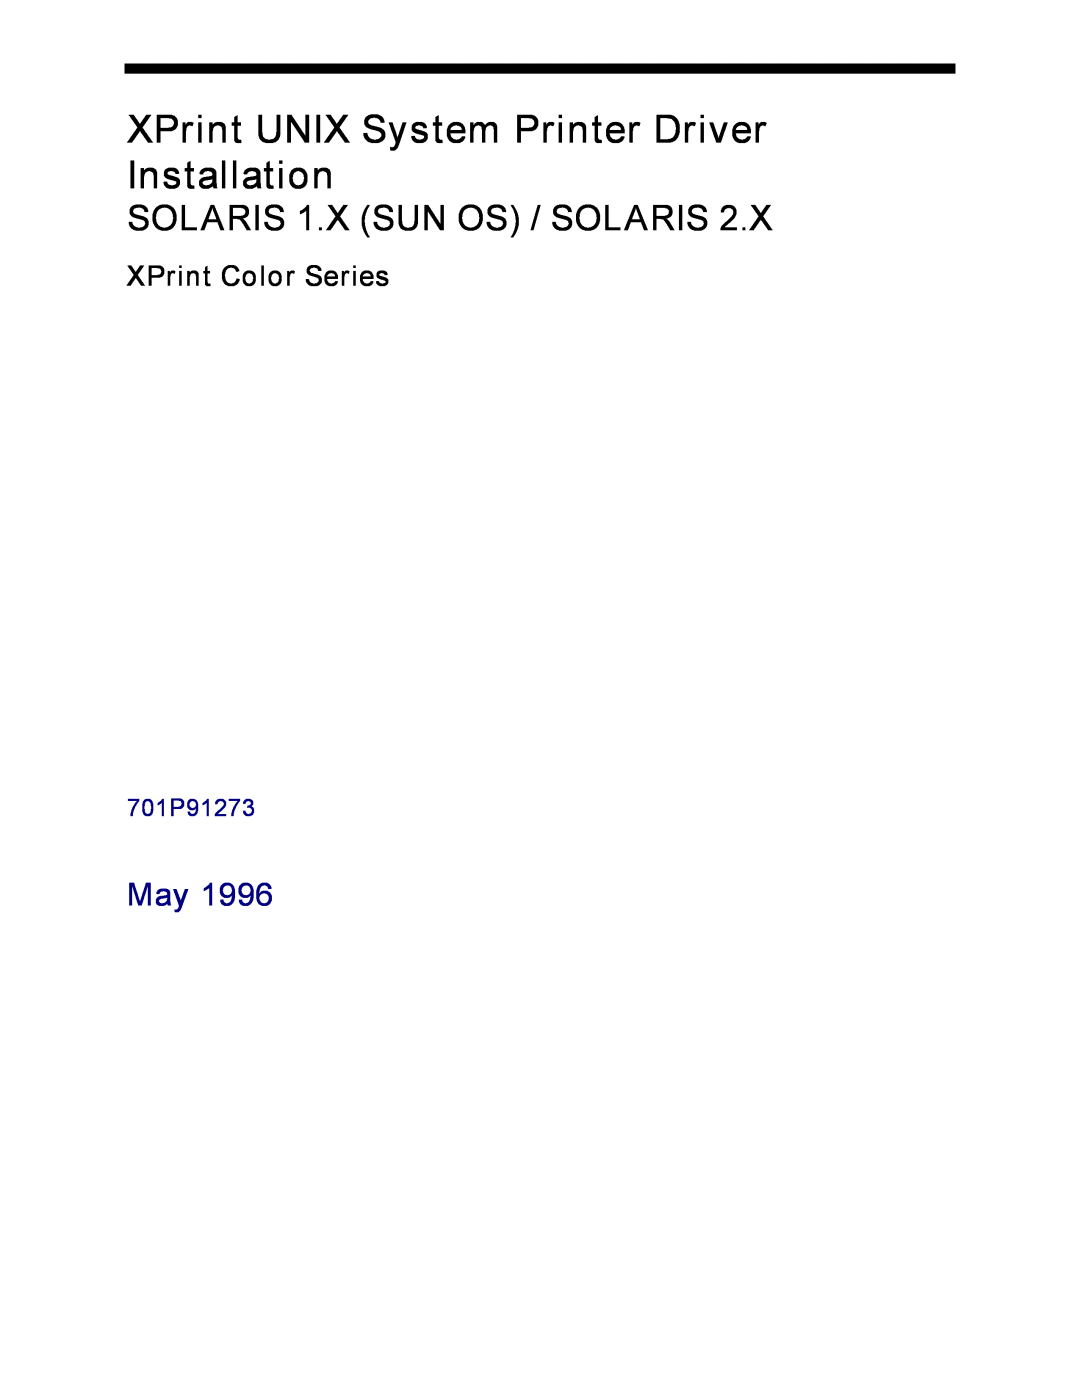 Xerox 701P91273 manual XPrint UNIX System Printer Driver Installation, SOLARIS 1.X SUN OS / SOLARIS, XPrint Color Series 